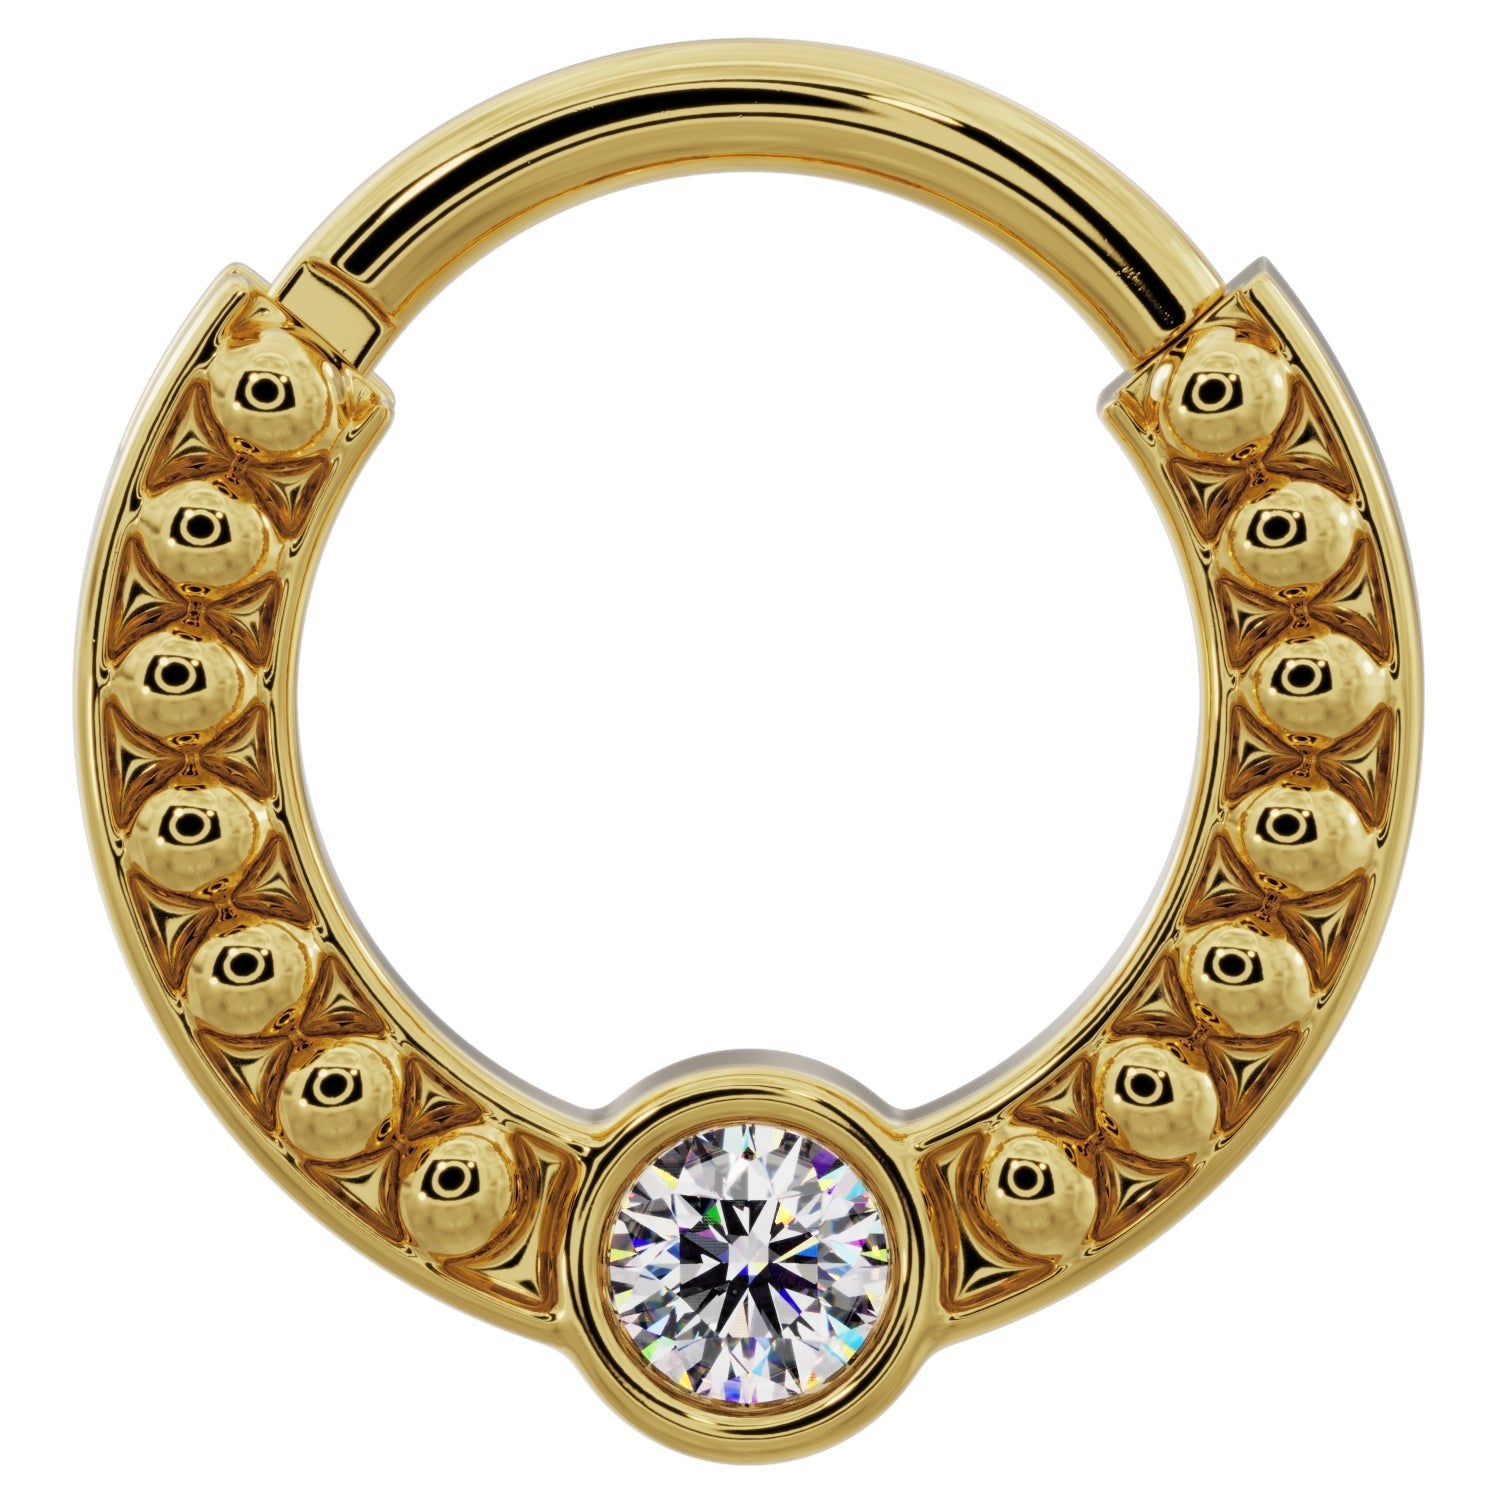 Diamond Bezel Channel-Set Dome Beads 14k Gold Clicker Ring-14K Yellow Gold   16G (1.2mm)   3 8